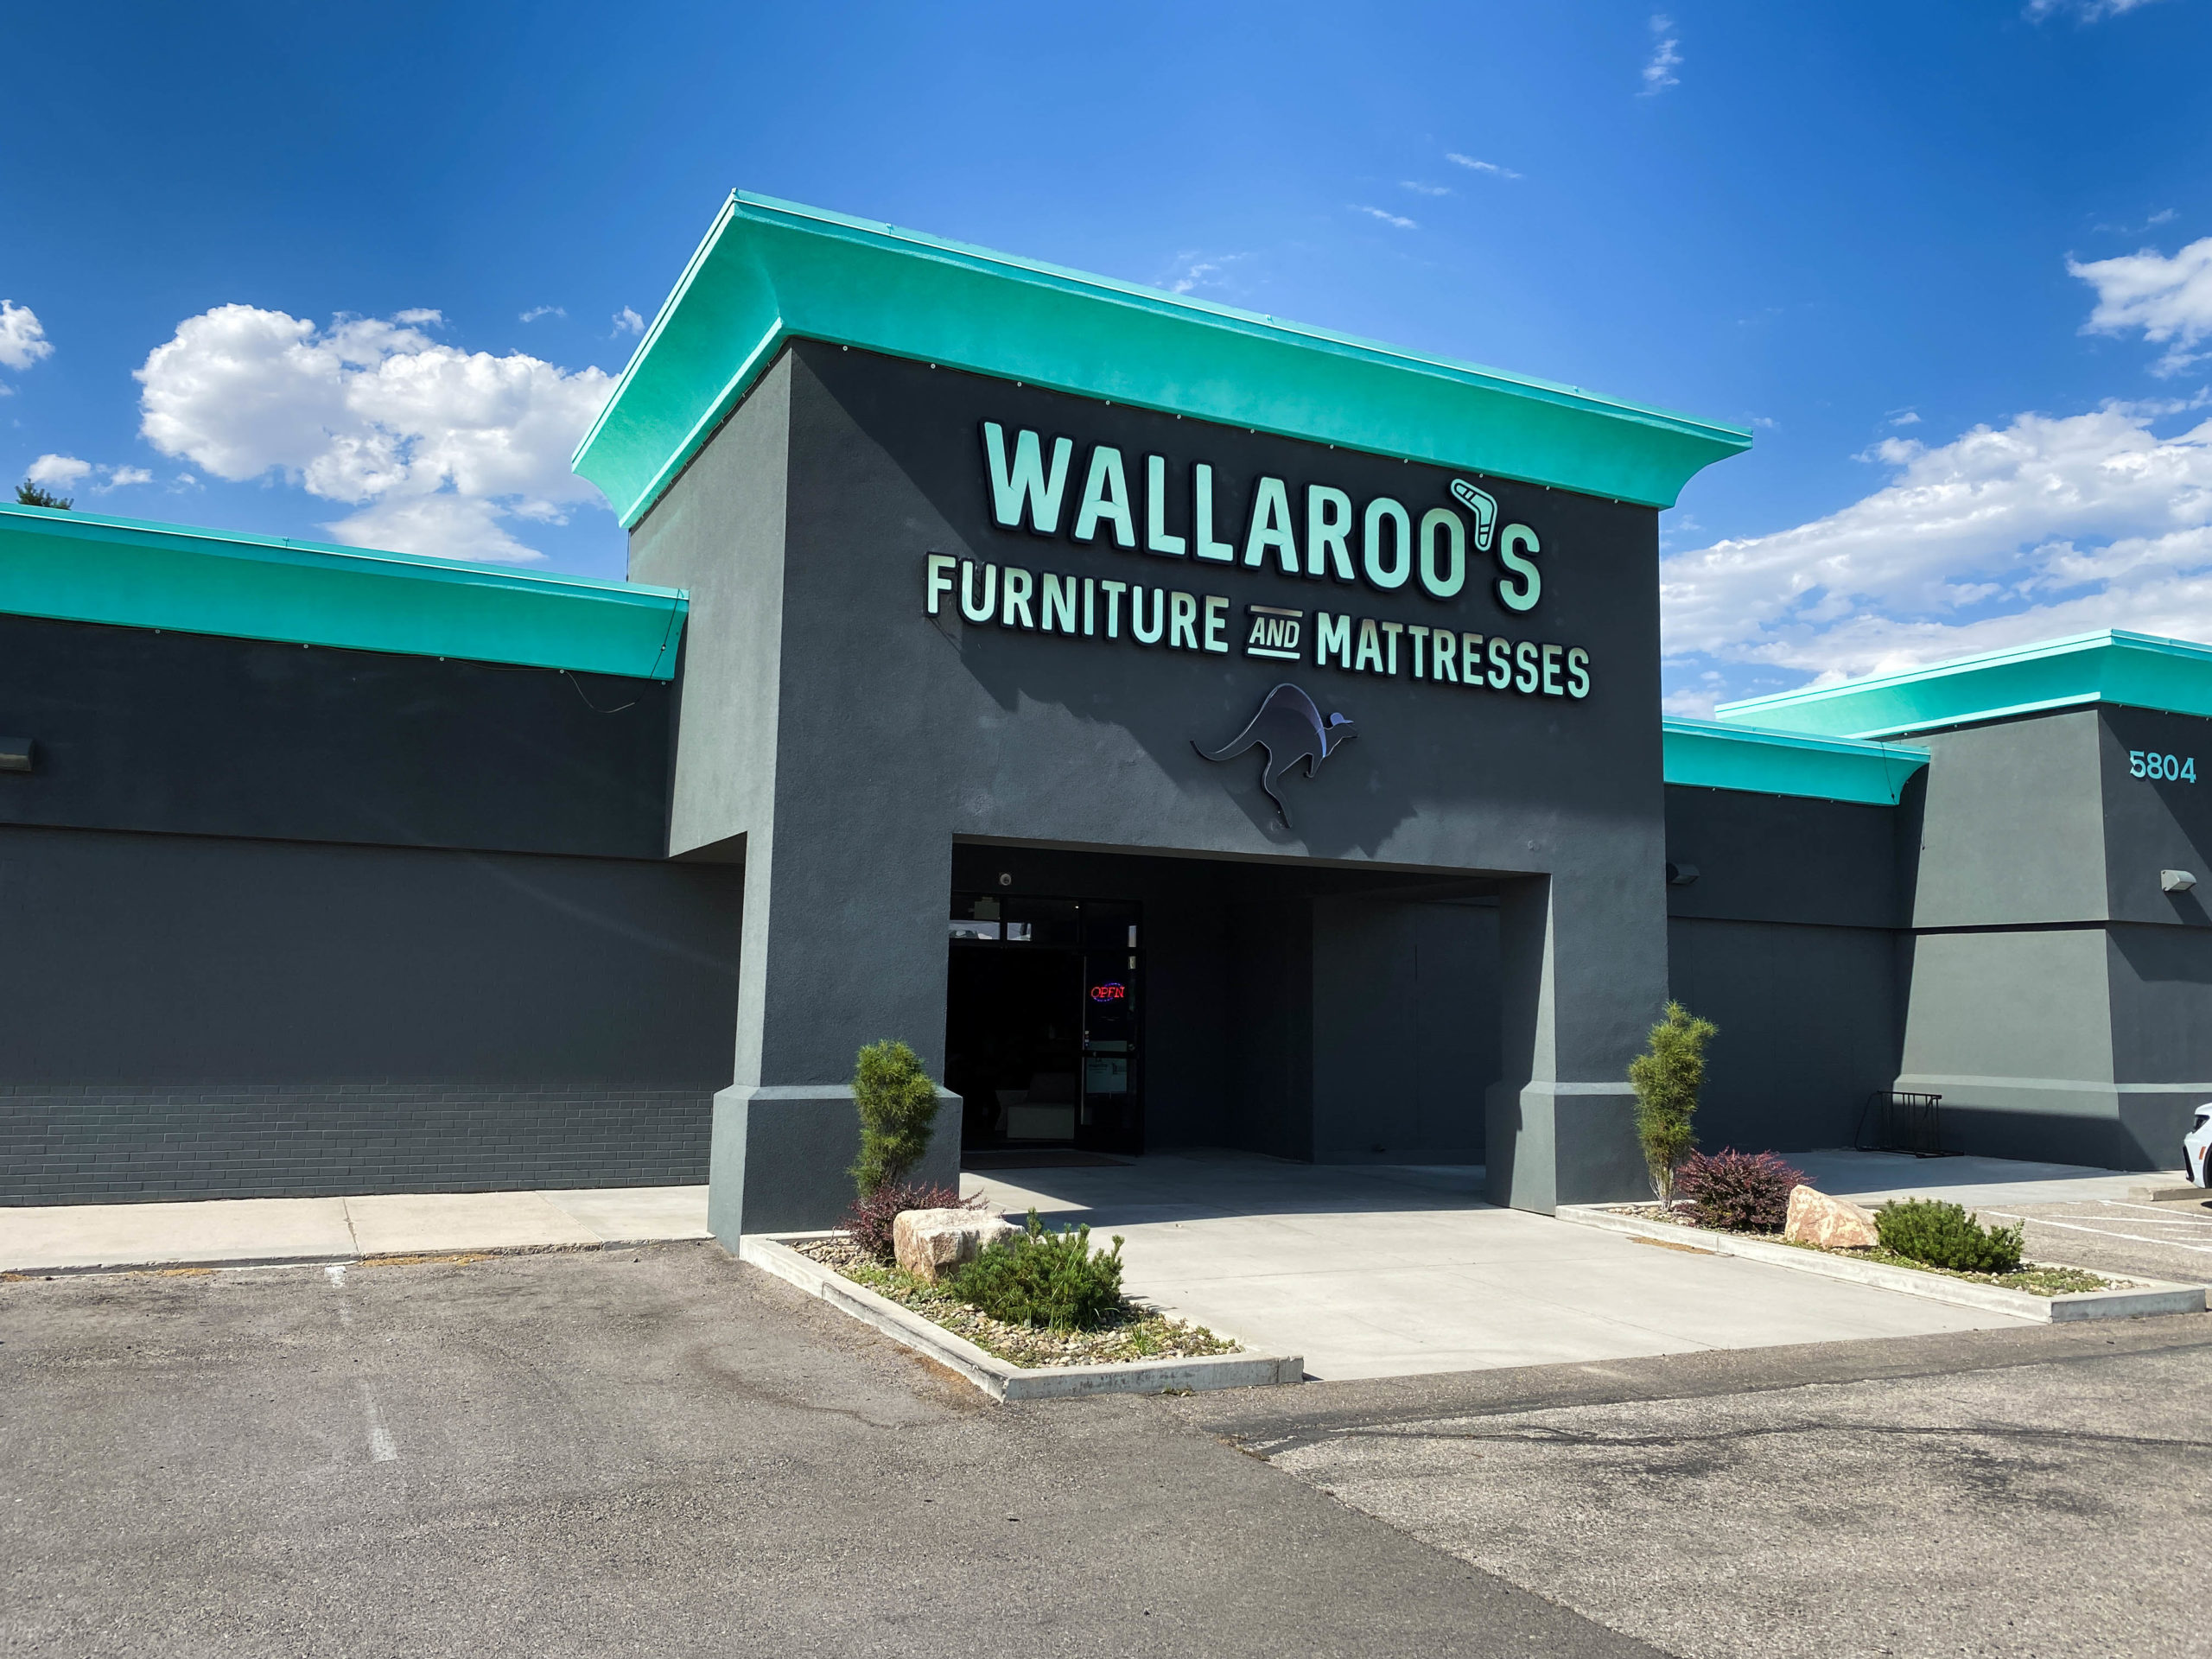 wallaroo's furniture and mattresses boise id 83704